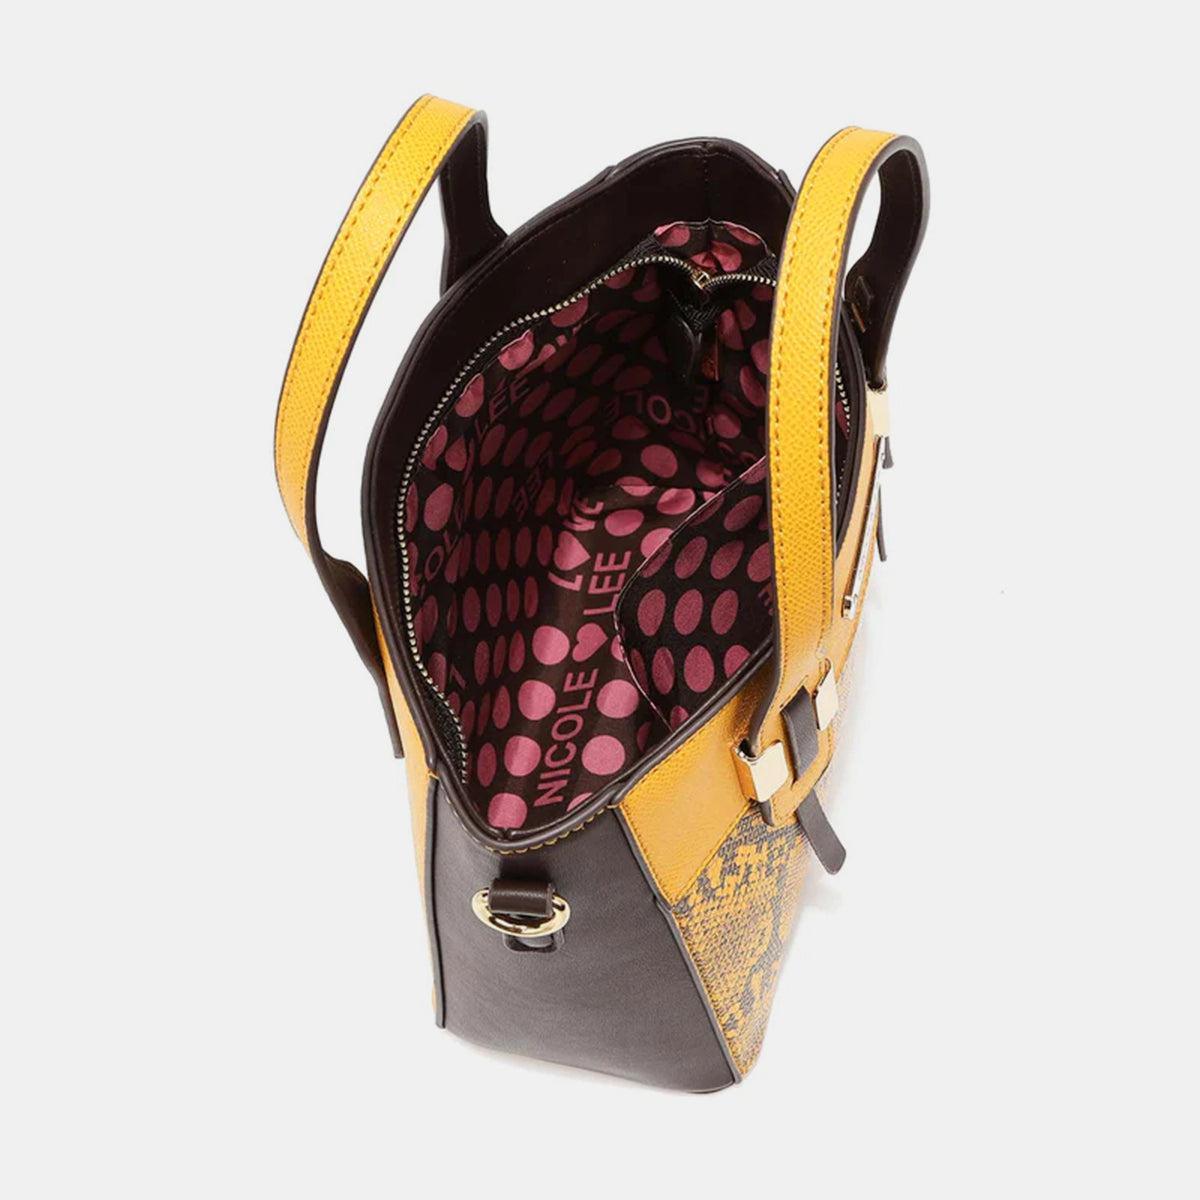 a yellow and black handbag with a polka dot pattern